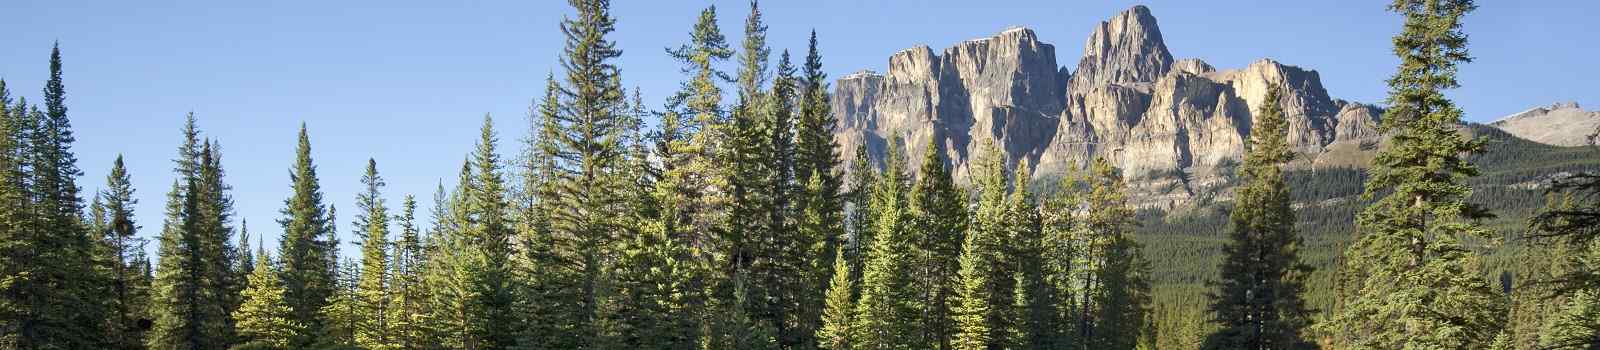 CAD-RM-JTC Alberta Banff Castle Mountain 94604068